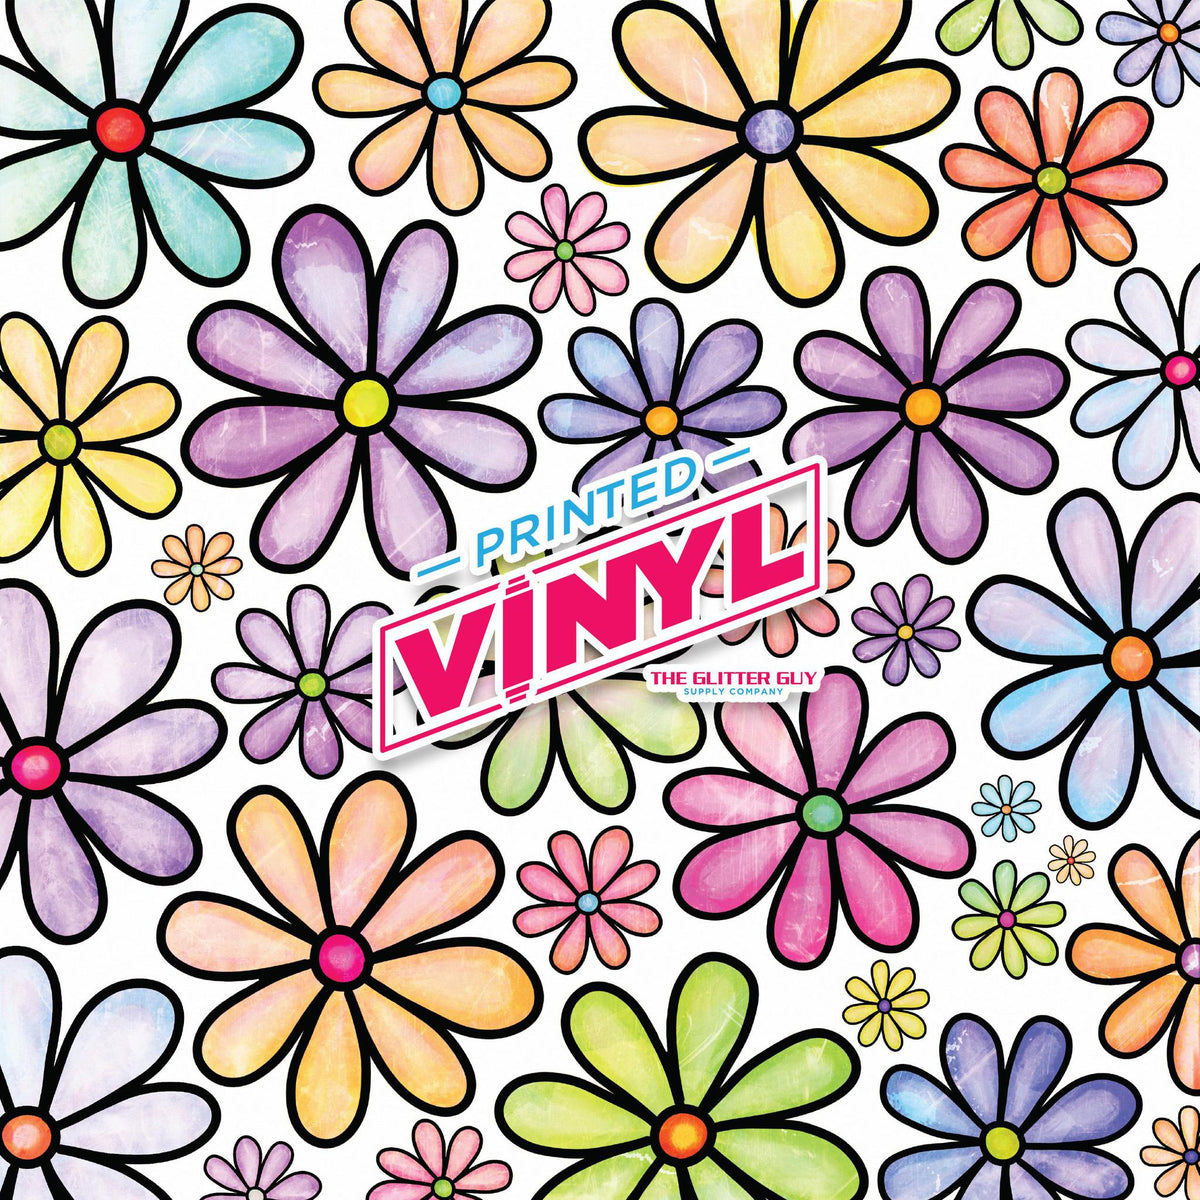 Printed Vinyl - Daisy Doodles Rainbow — The Glitter Guy